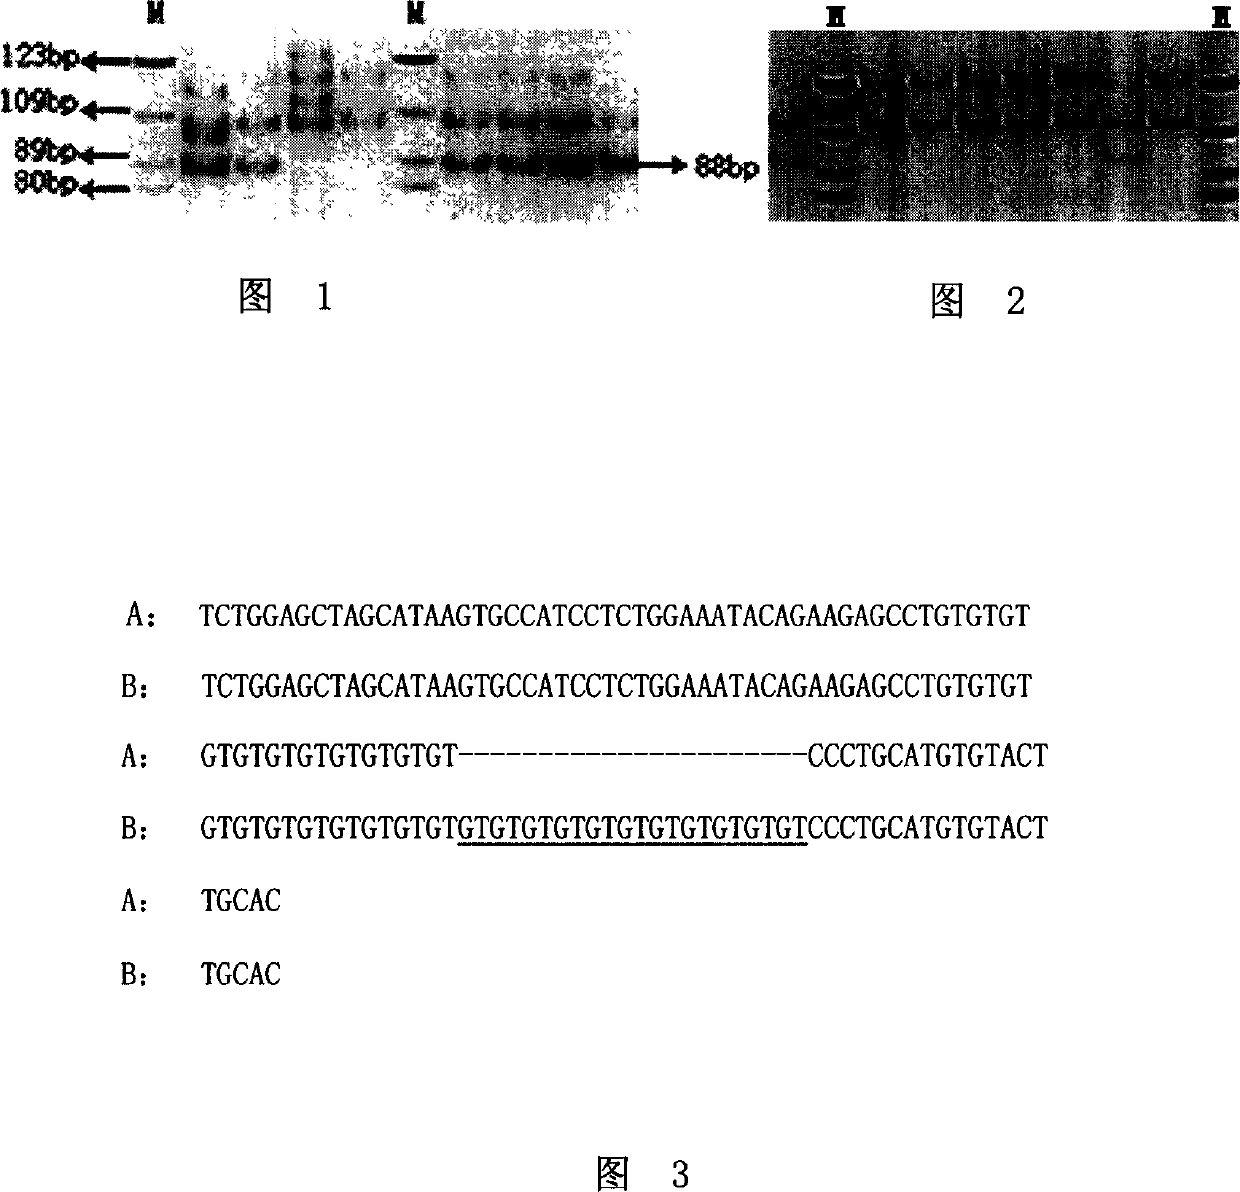 Molecular marker of Wuzhishan pig and its application